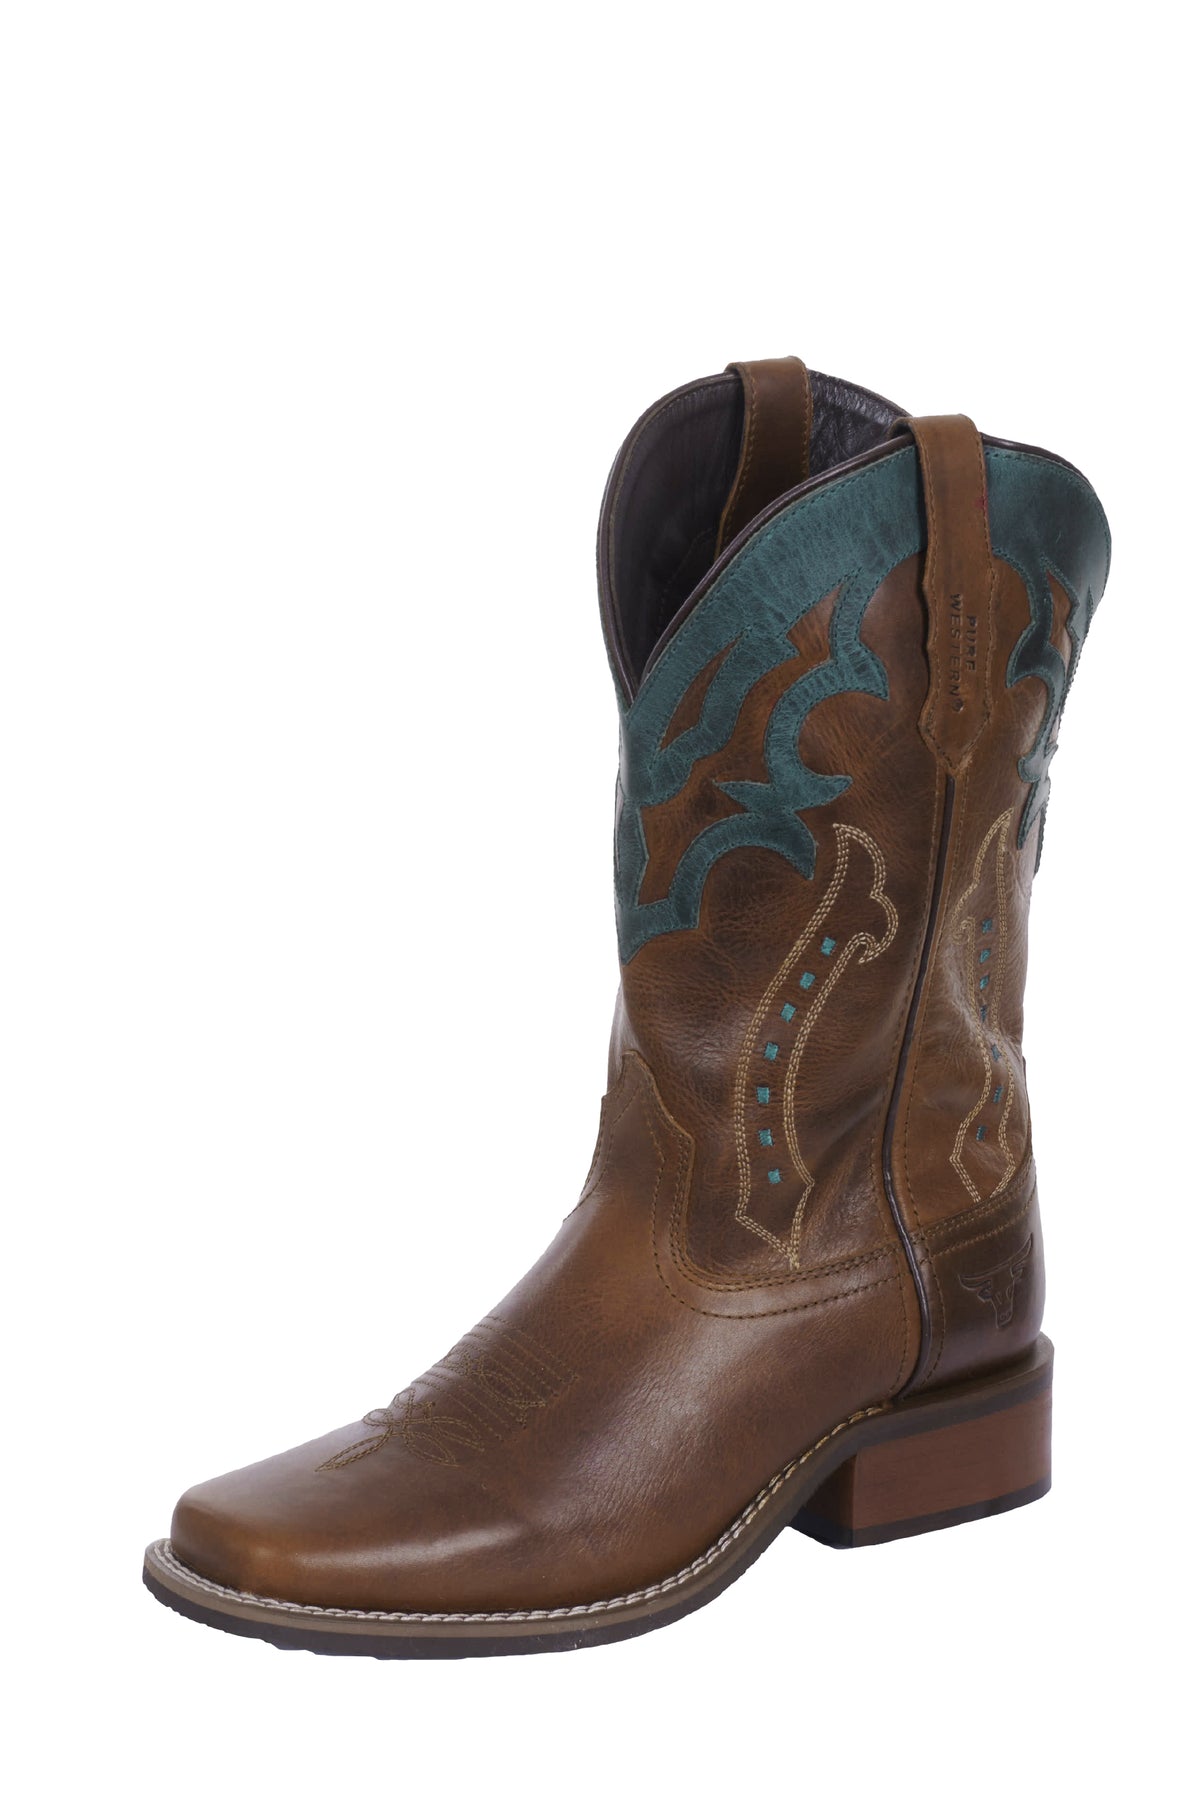 Pure Western Womens Abilene Boot - Oiled Brown/Dark Teal